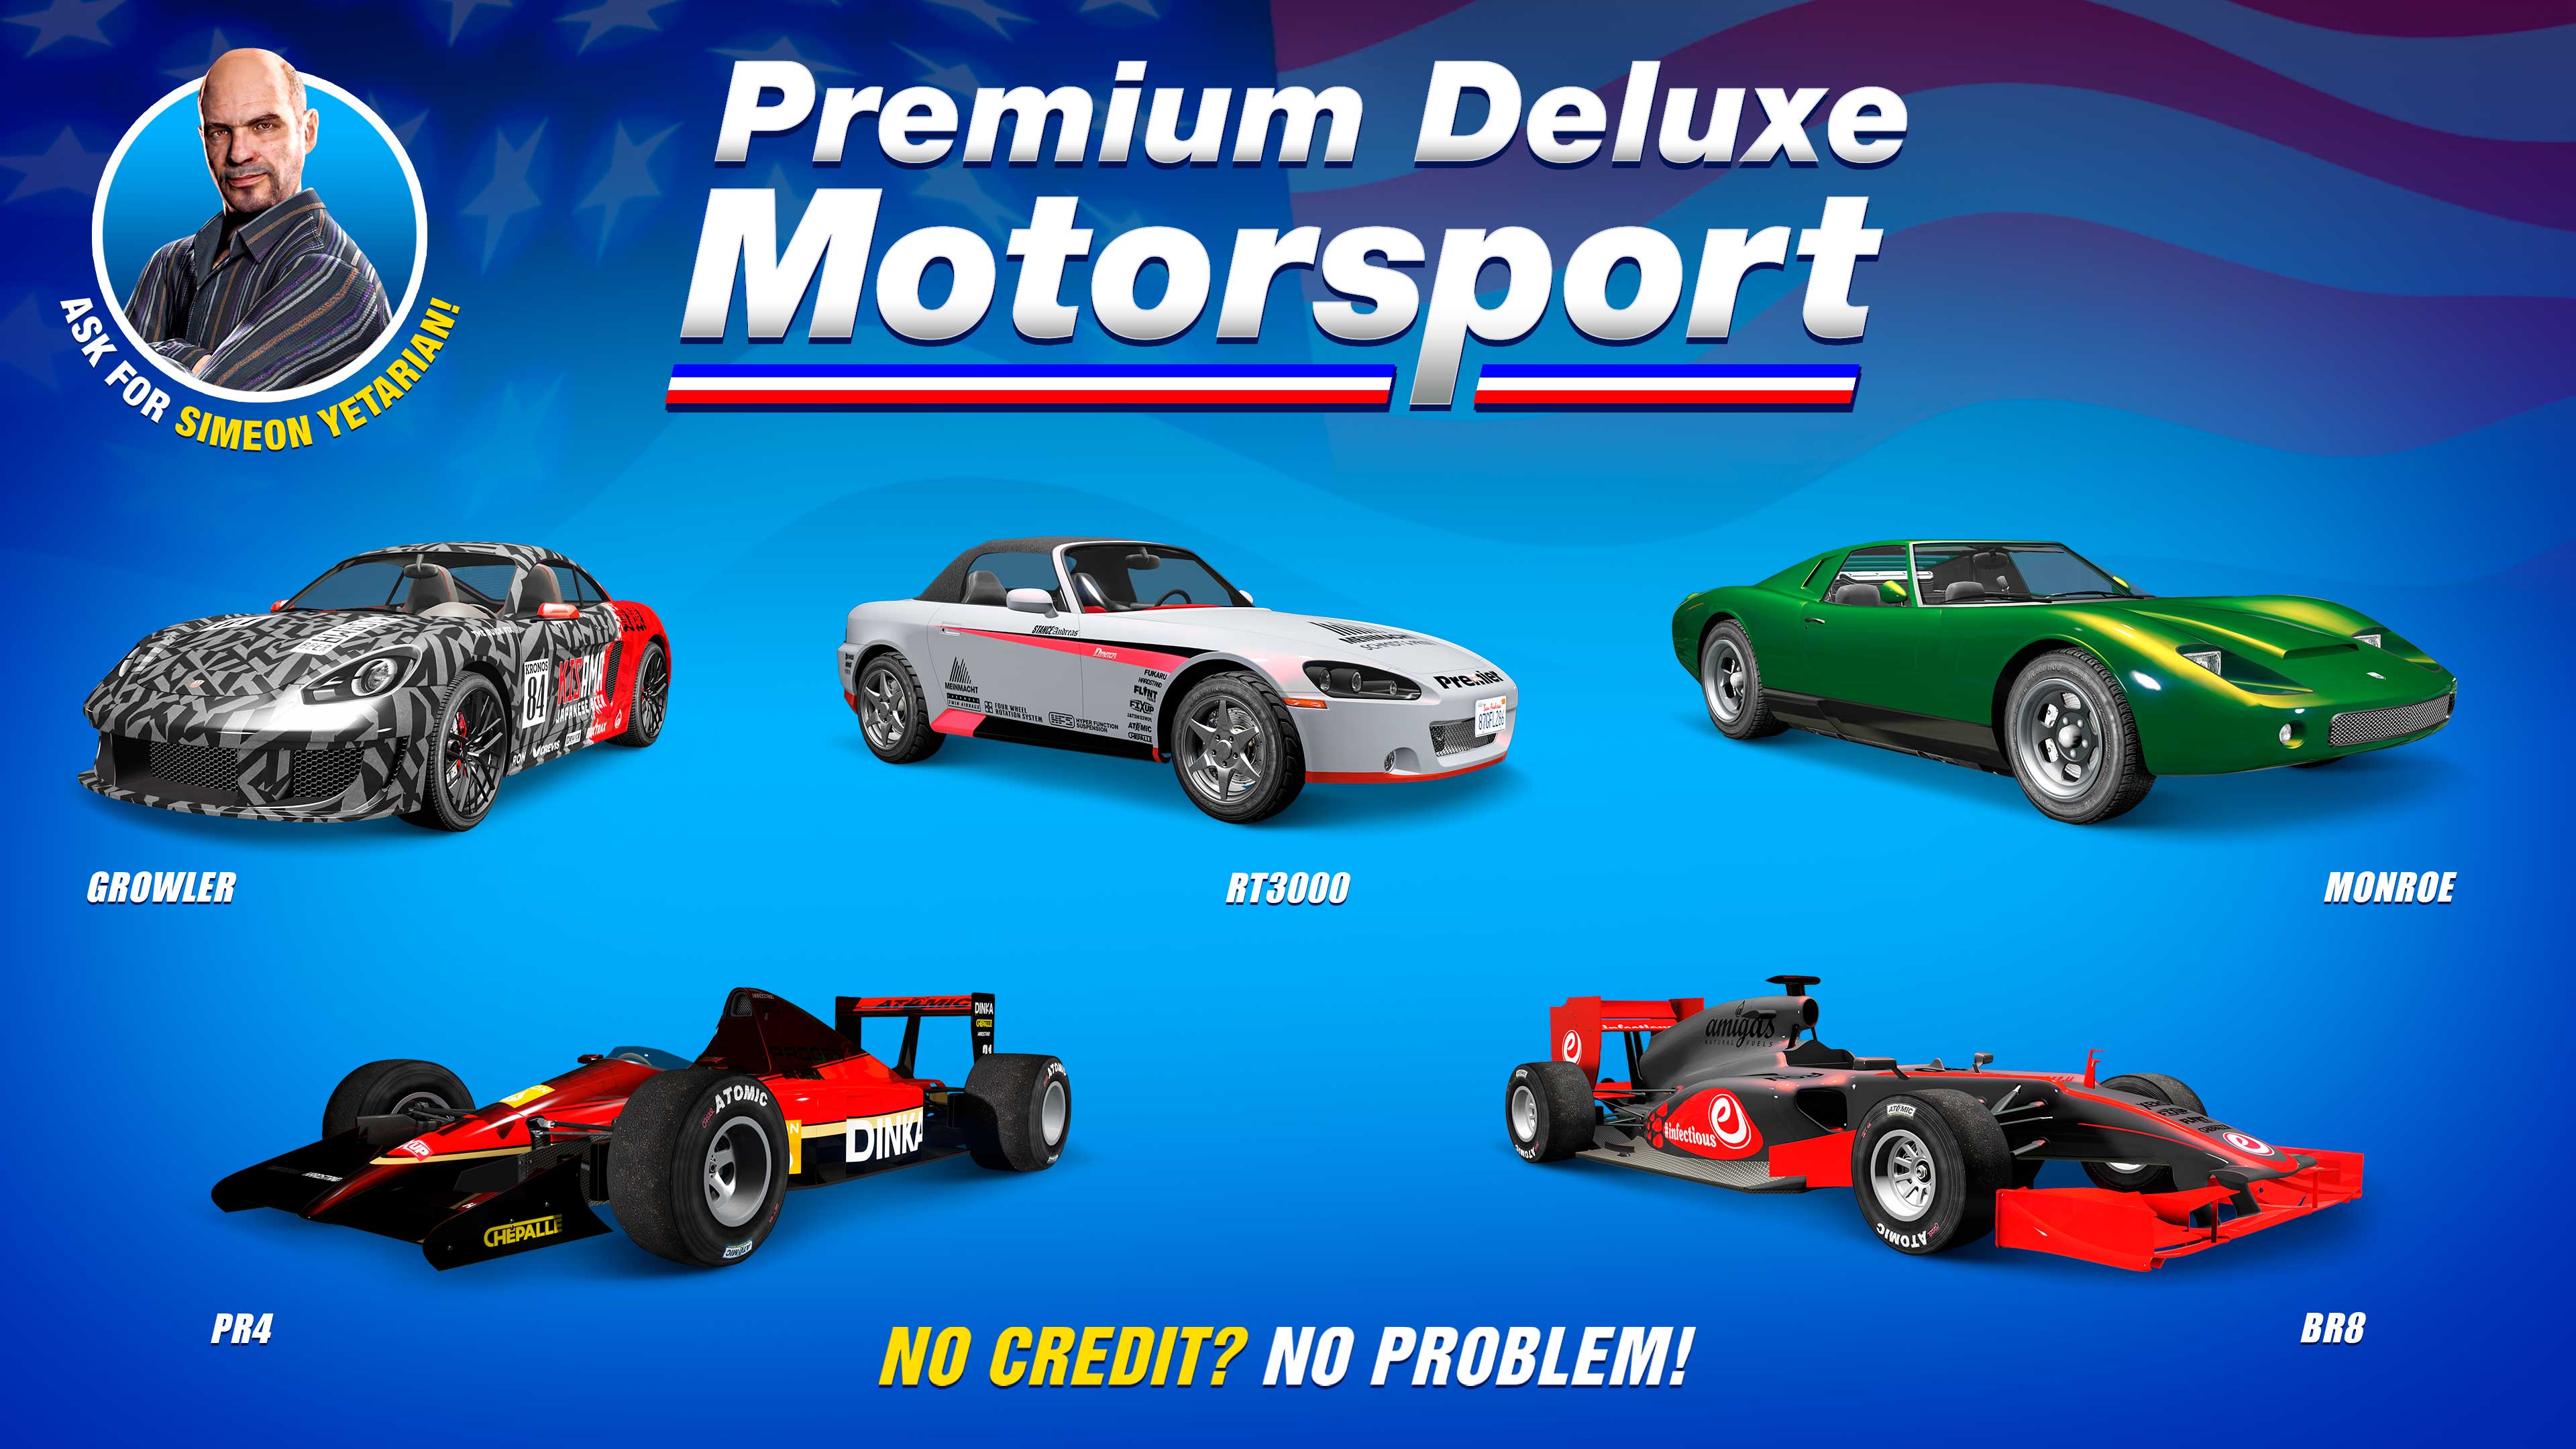 Autosalone Premium Deluxe Motorsport